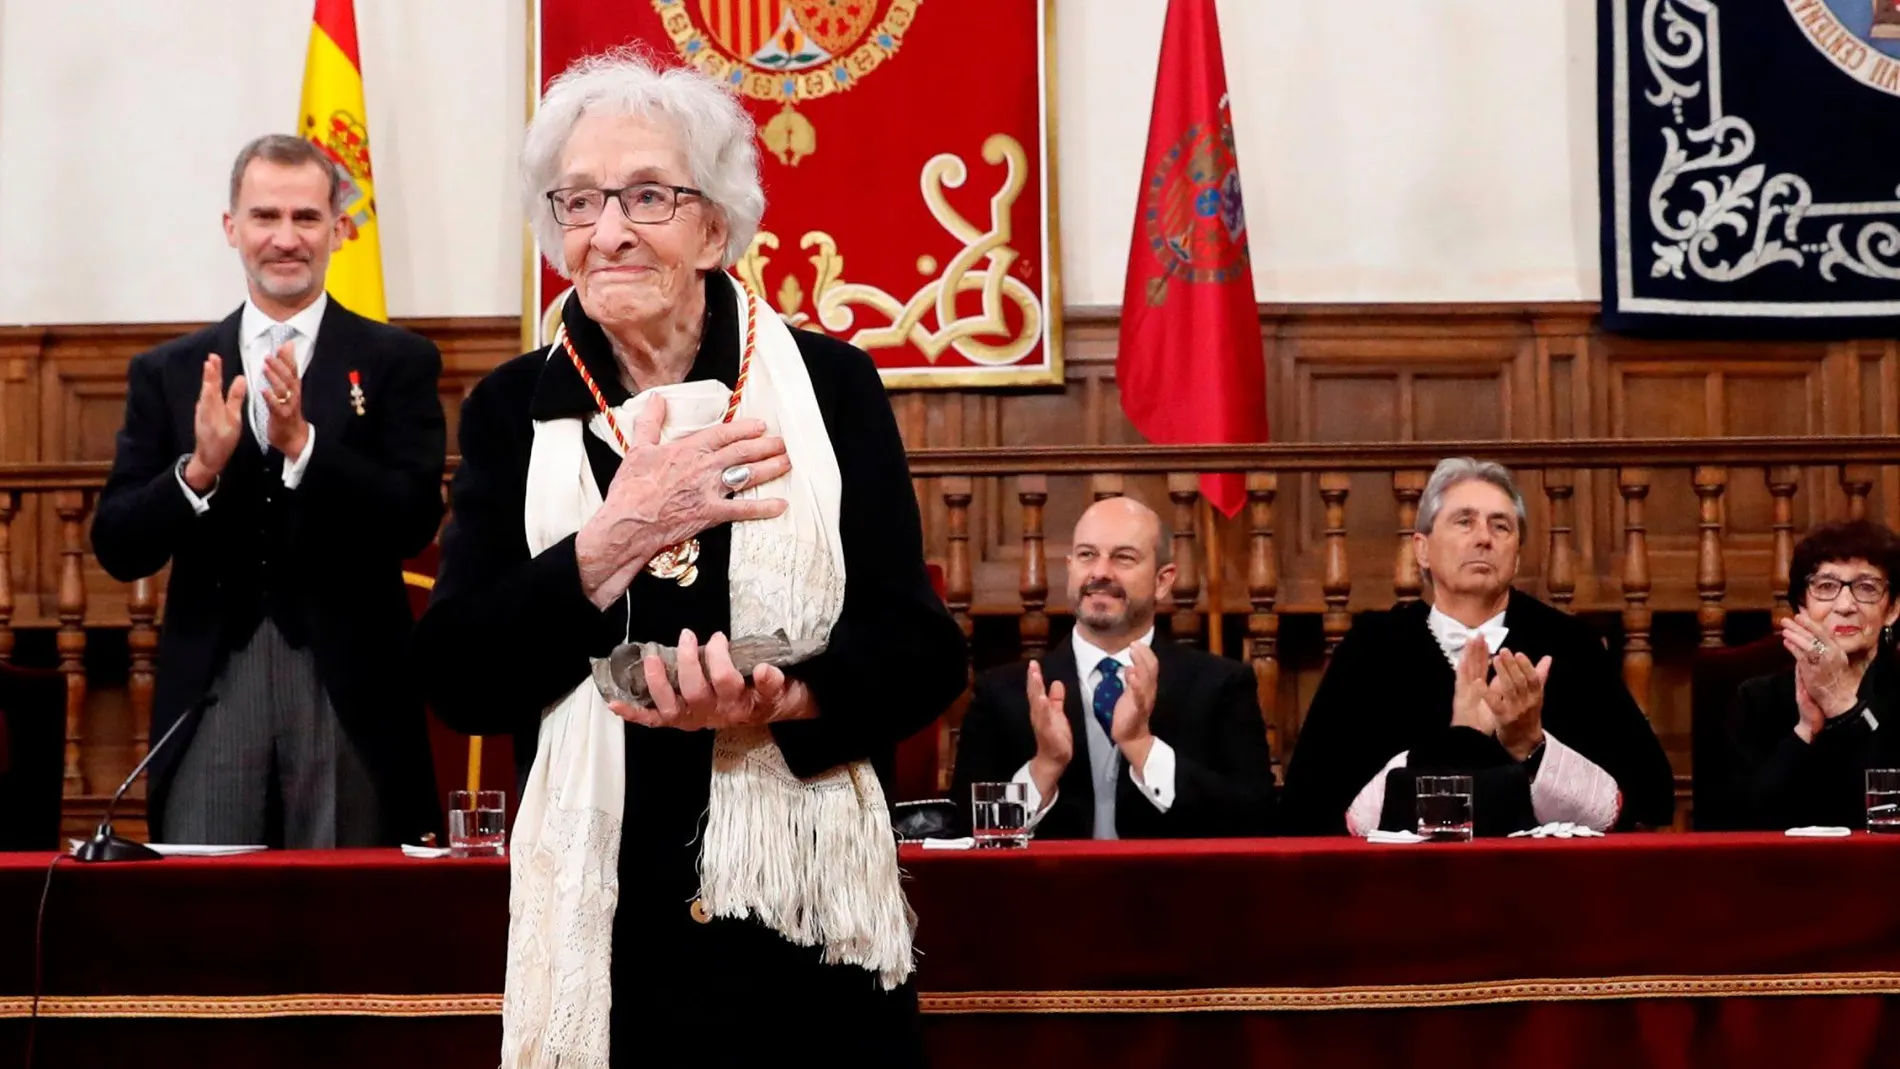 La poeta uruguaya Ida Vitale tras recibir el Premio Cervantes 2018